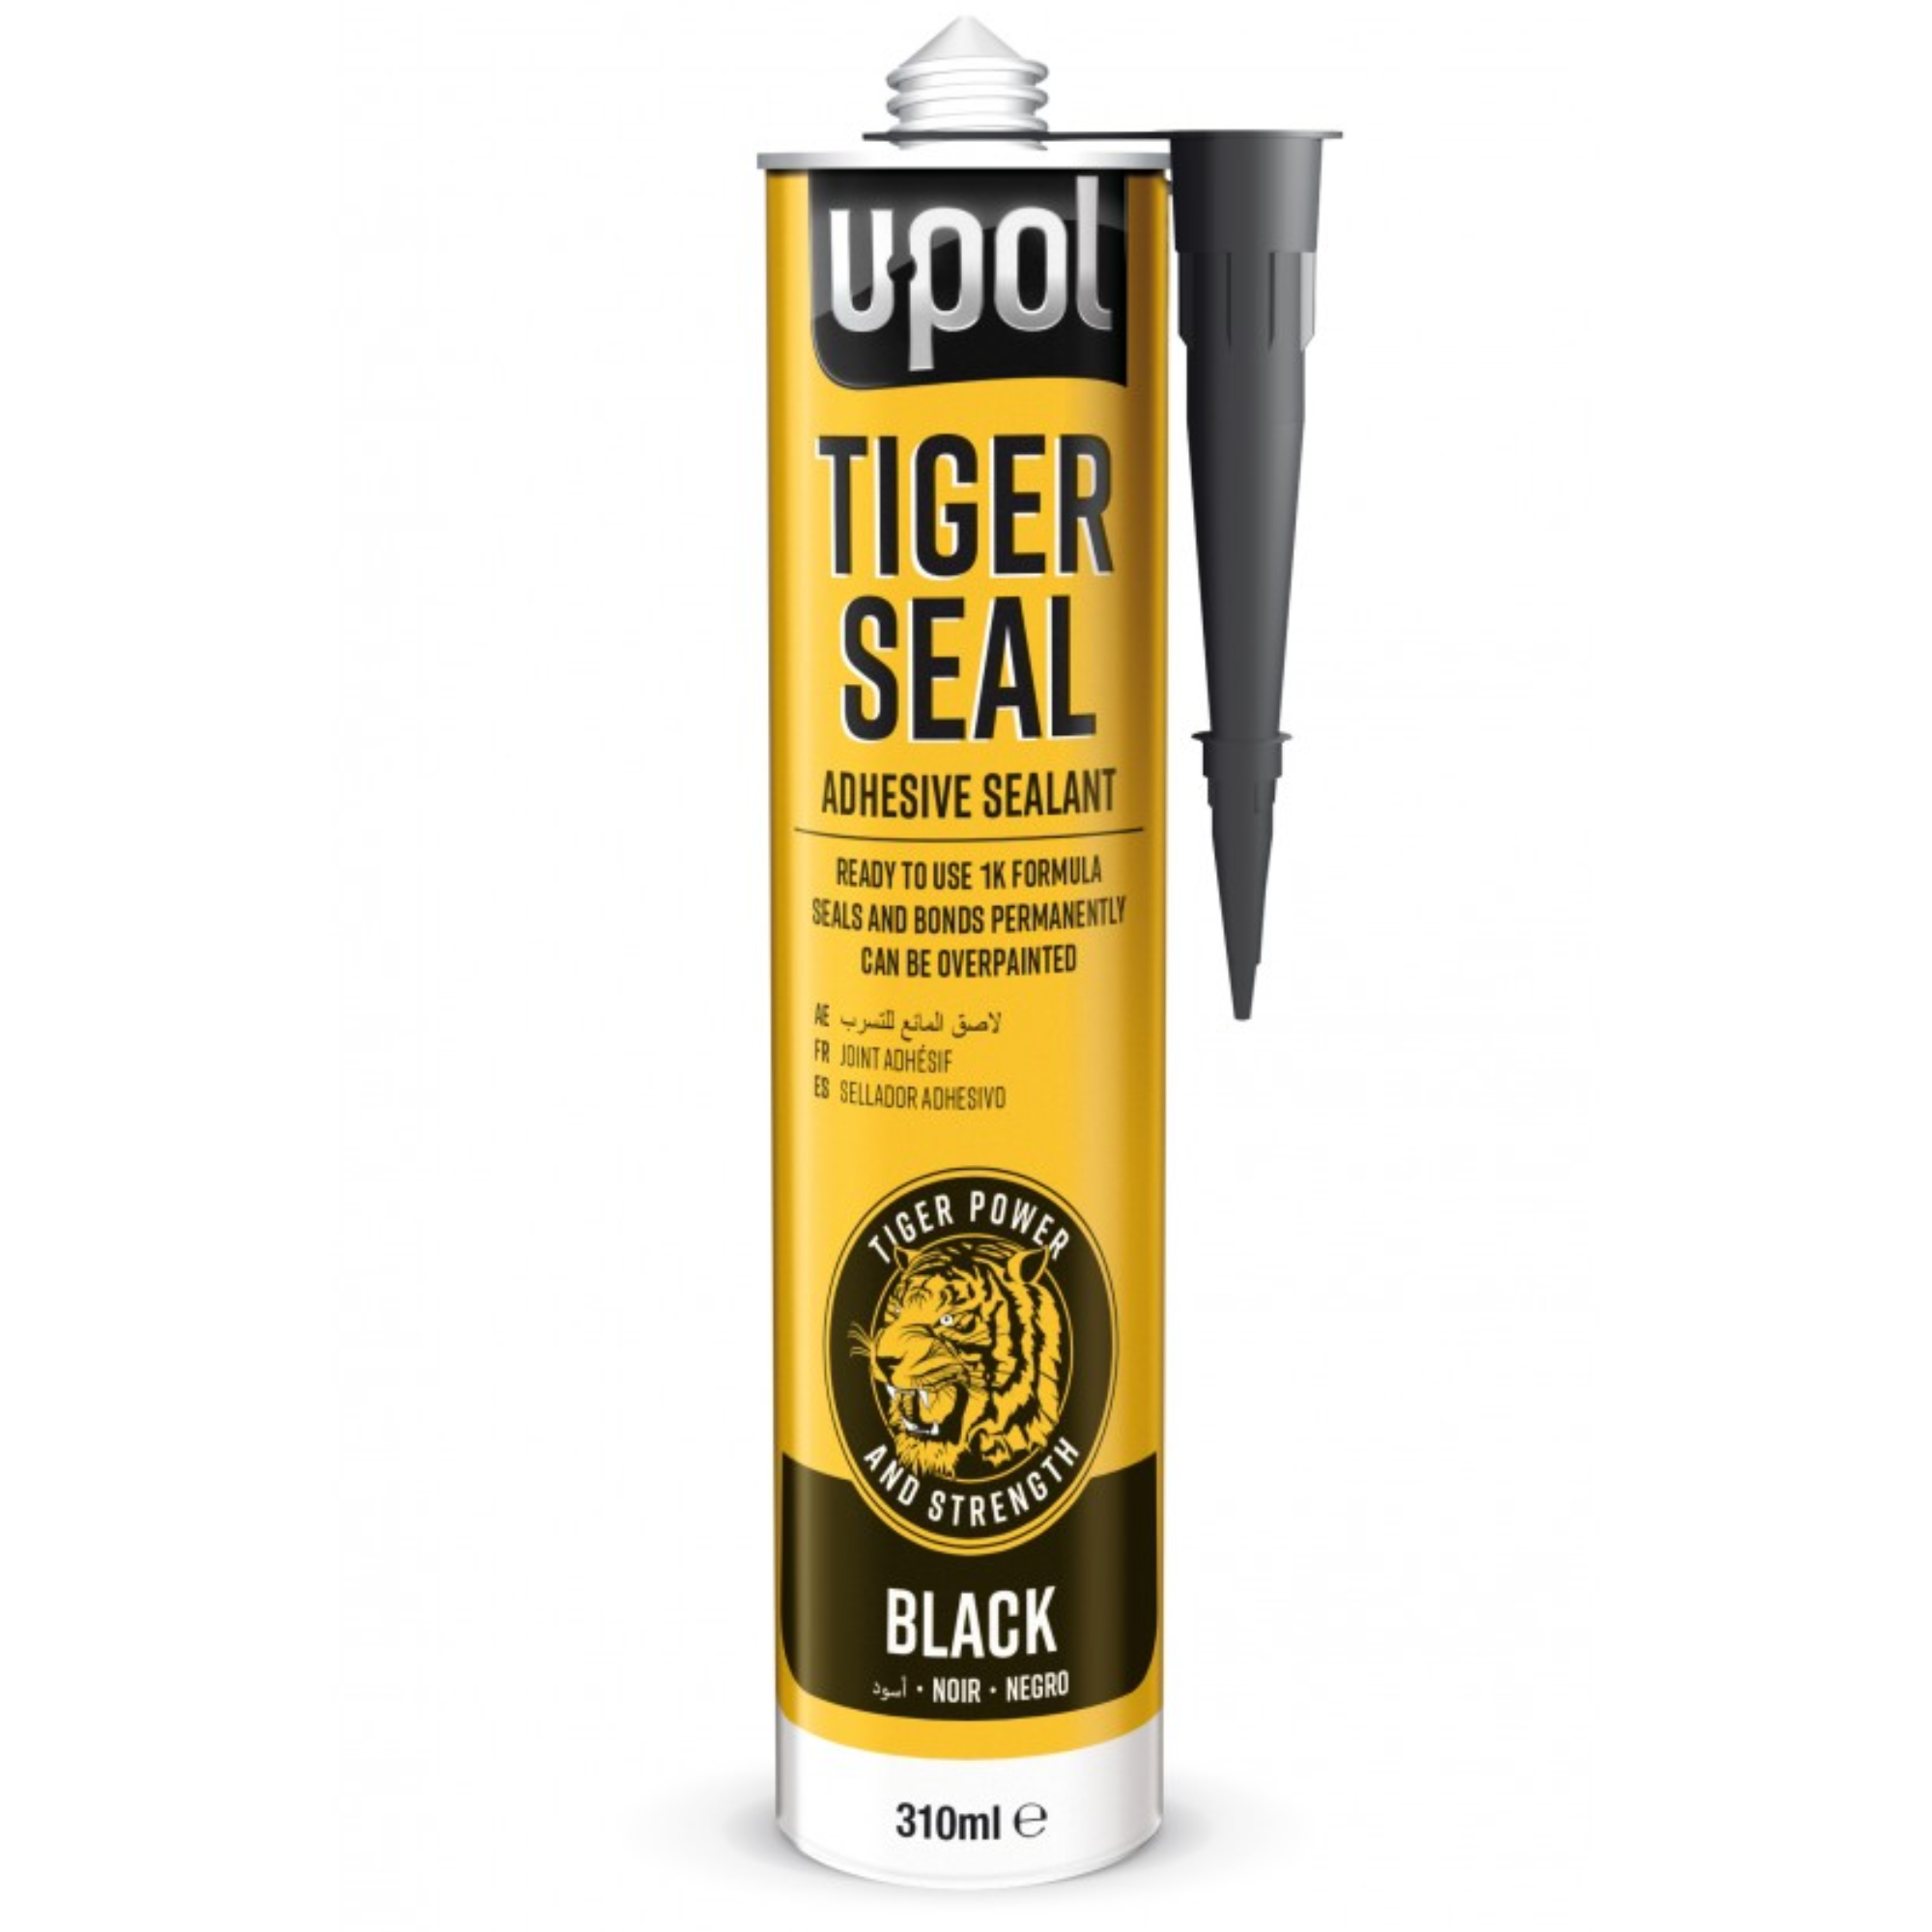 U-pol Black Tiger Seal Adhesive Sealant 310ml